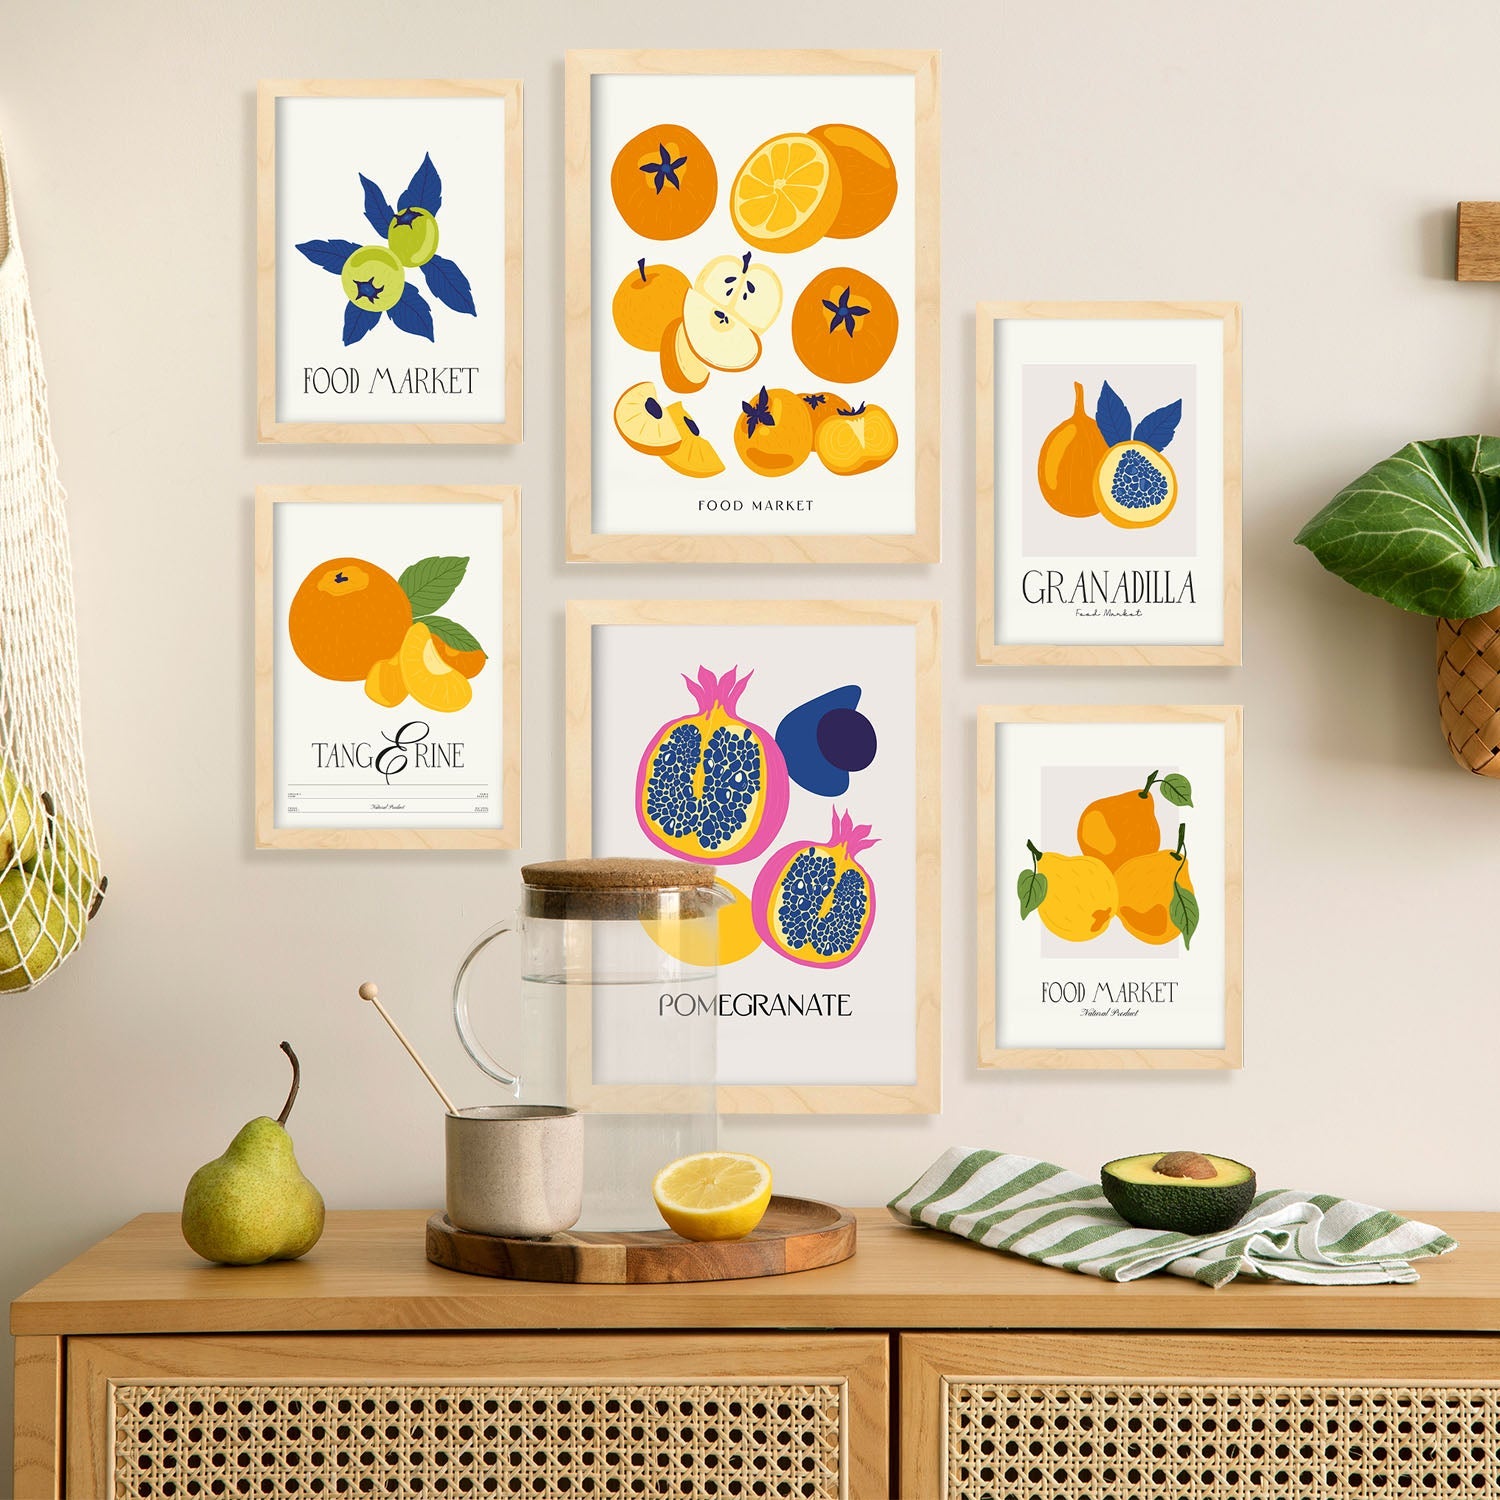 Food and Plants Posters. Round Fruits. Nature and Botany-Artwork-Nacnic-Nacnic Estudio SL